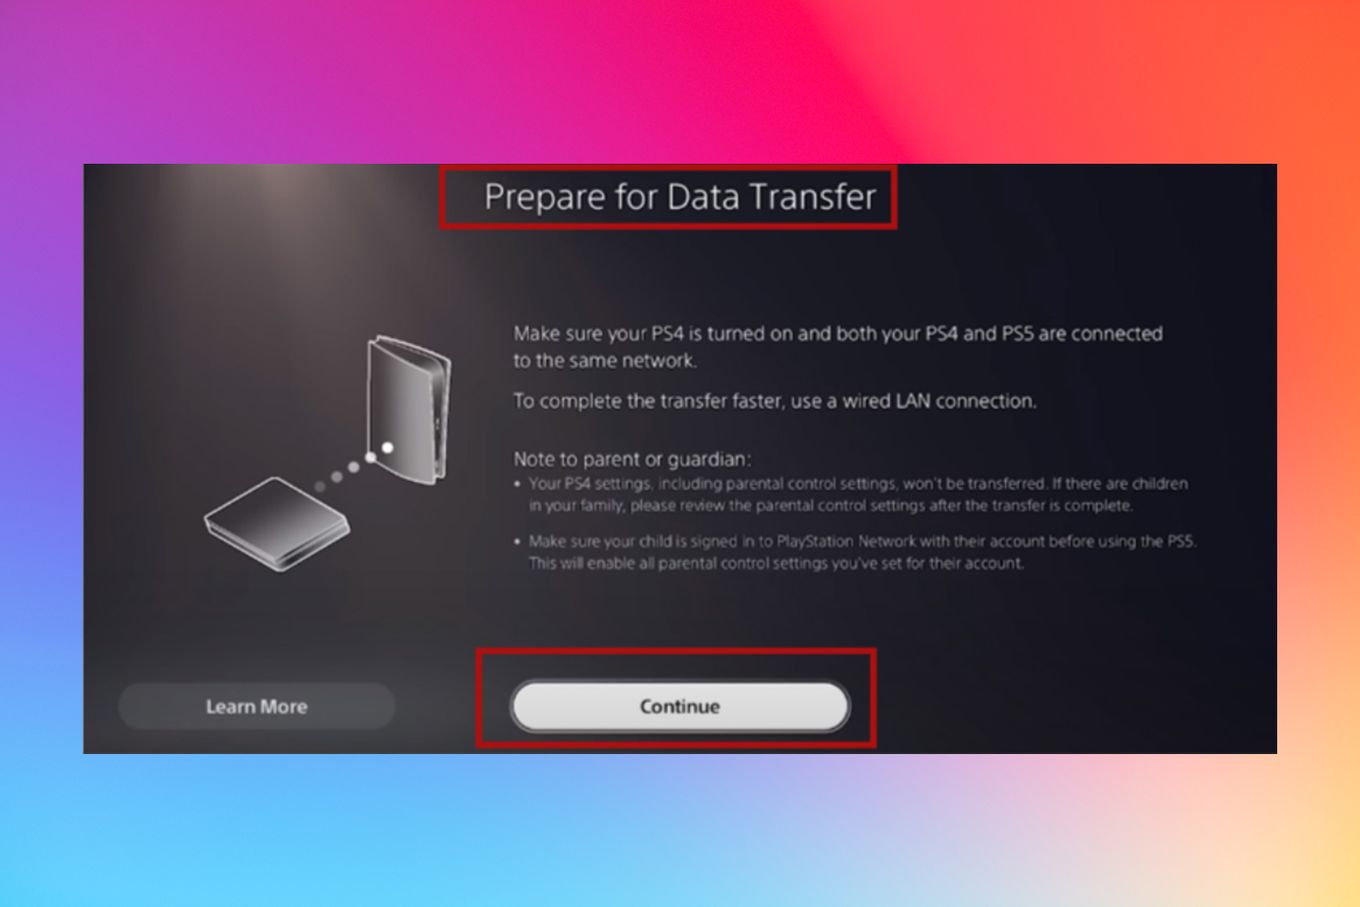 Prepare for Data Transfer